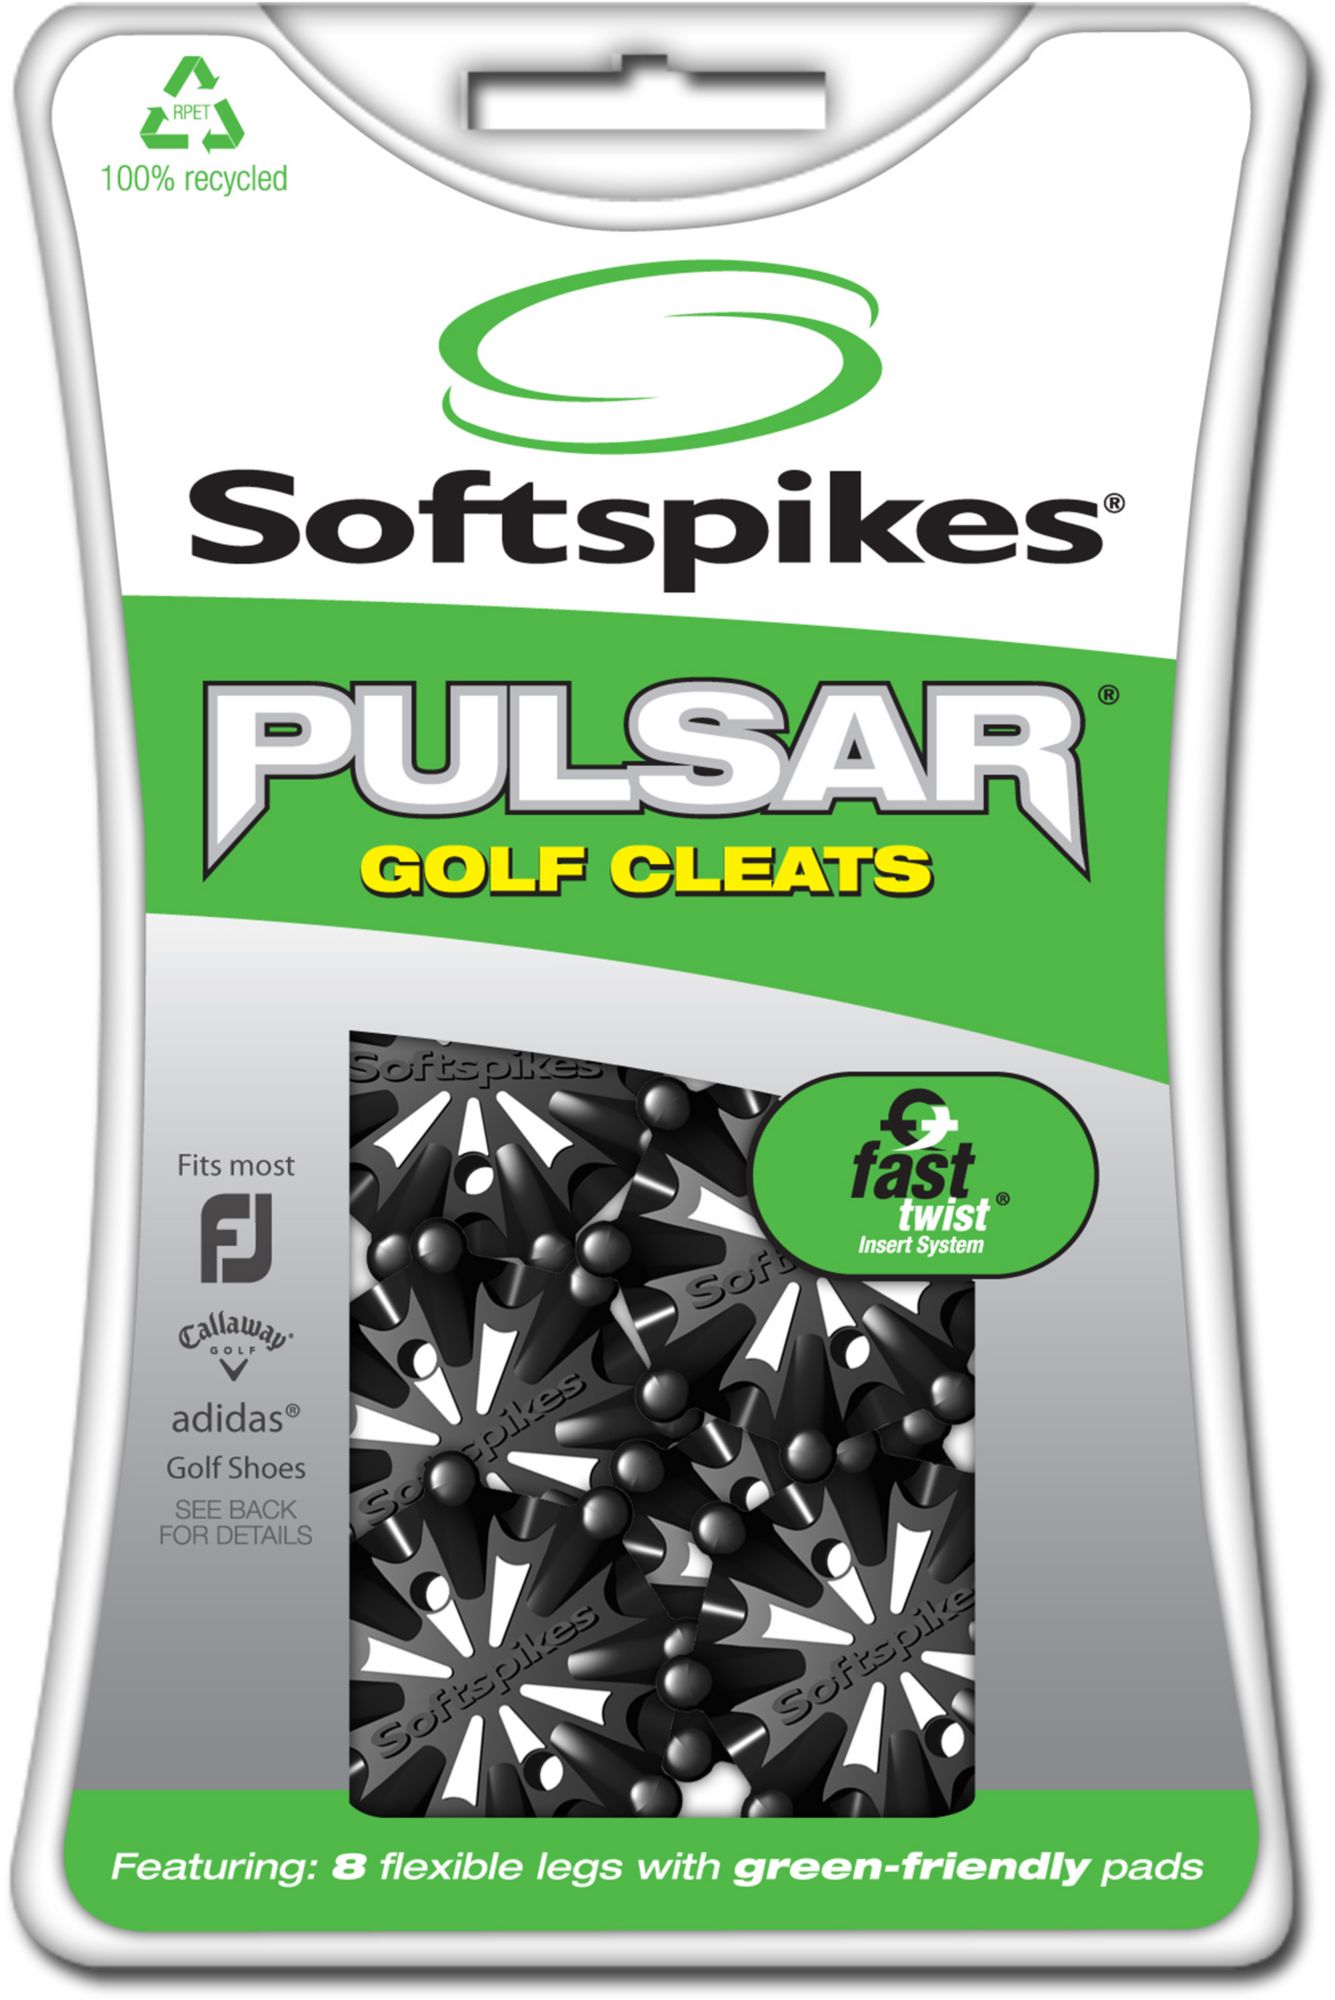 softspikes adidas pulsar pins golf cleats